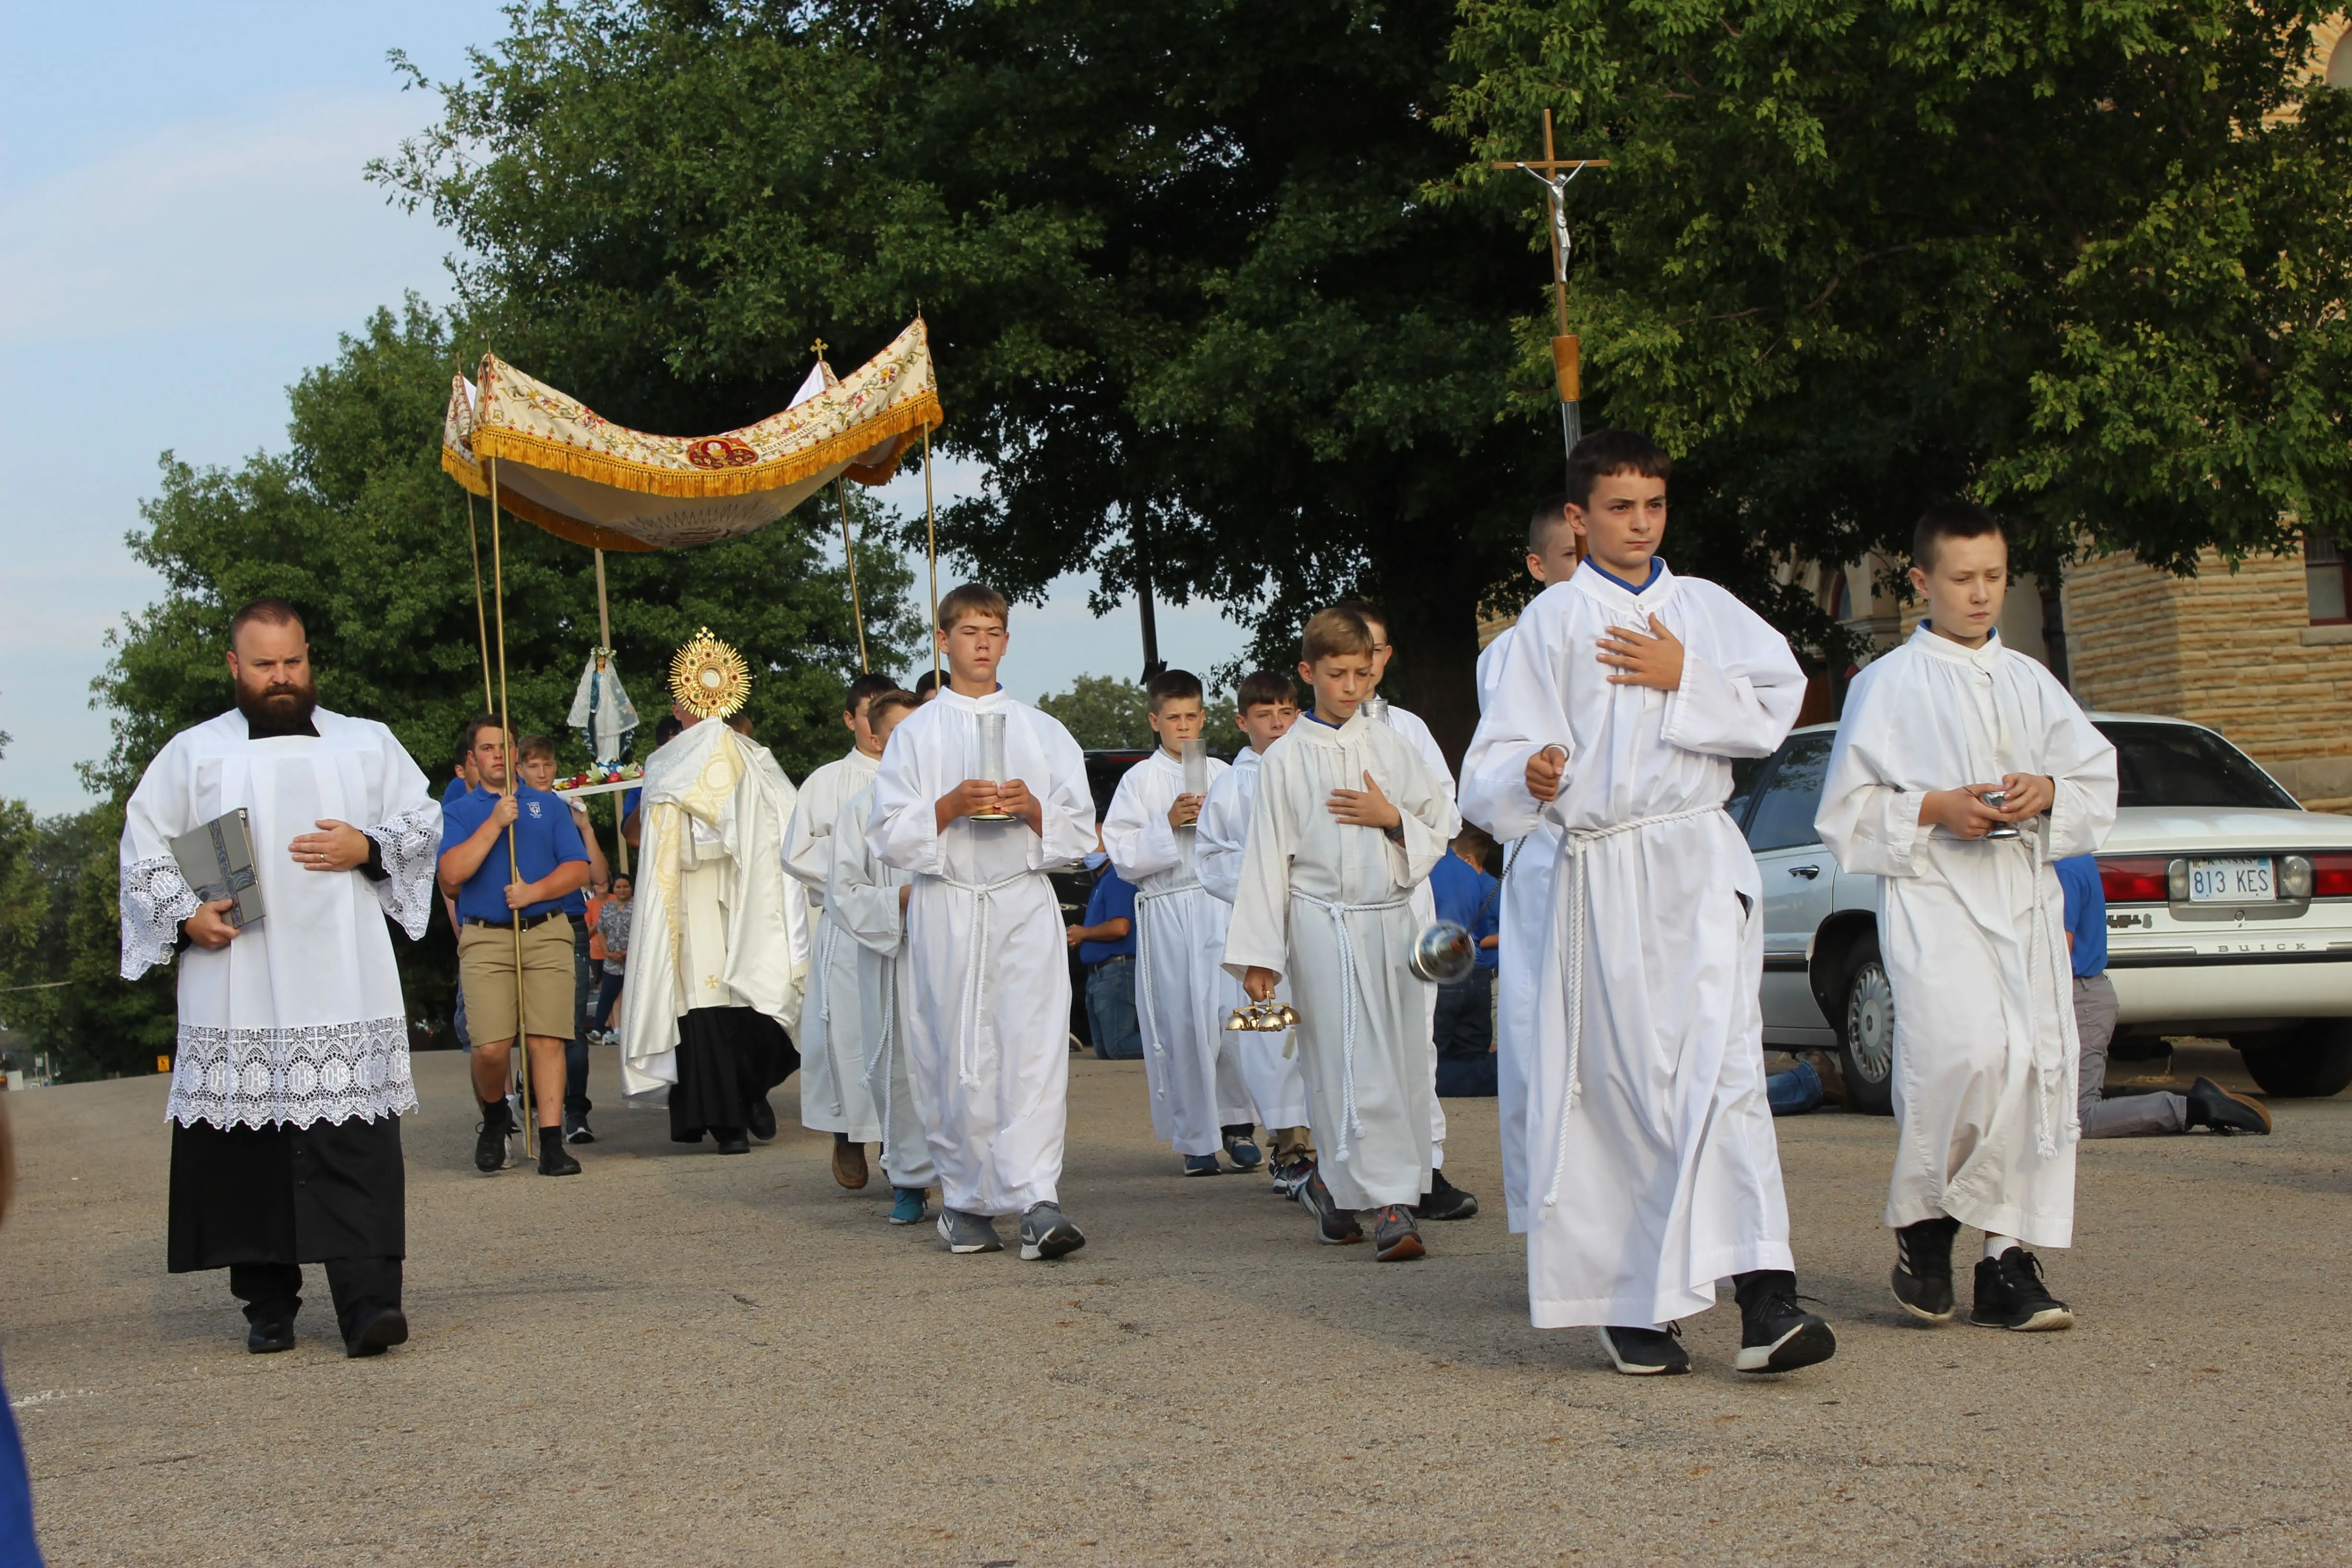 A Eucharistic procession at St. John the Baptist parish in Beloit, Kansas.?w=200&h=150